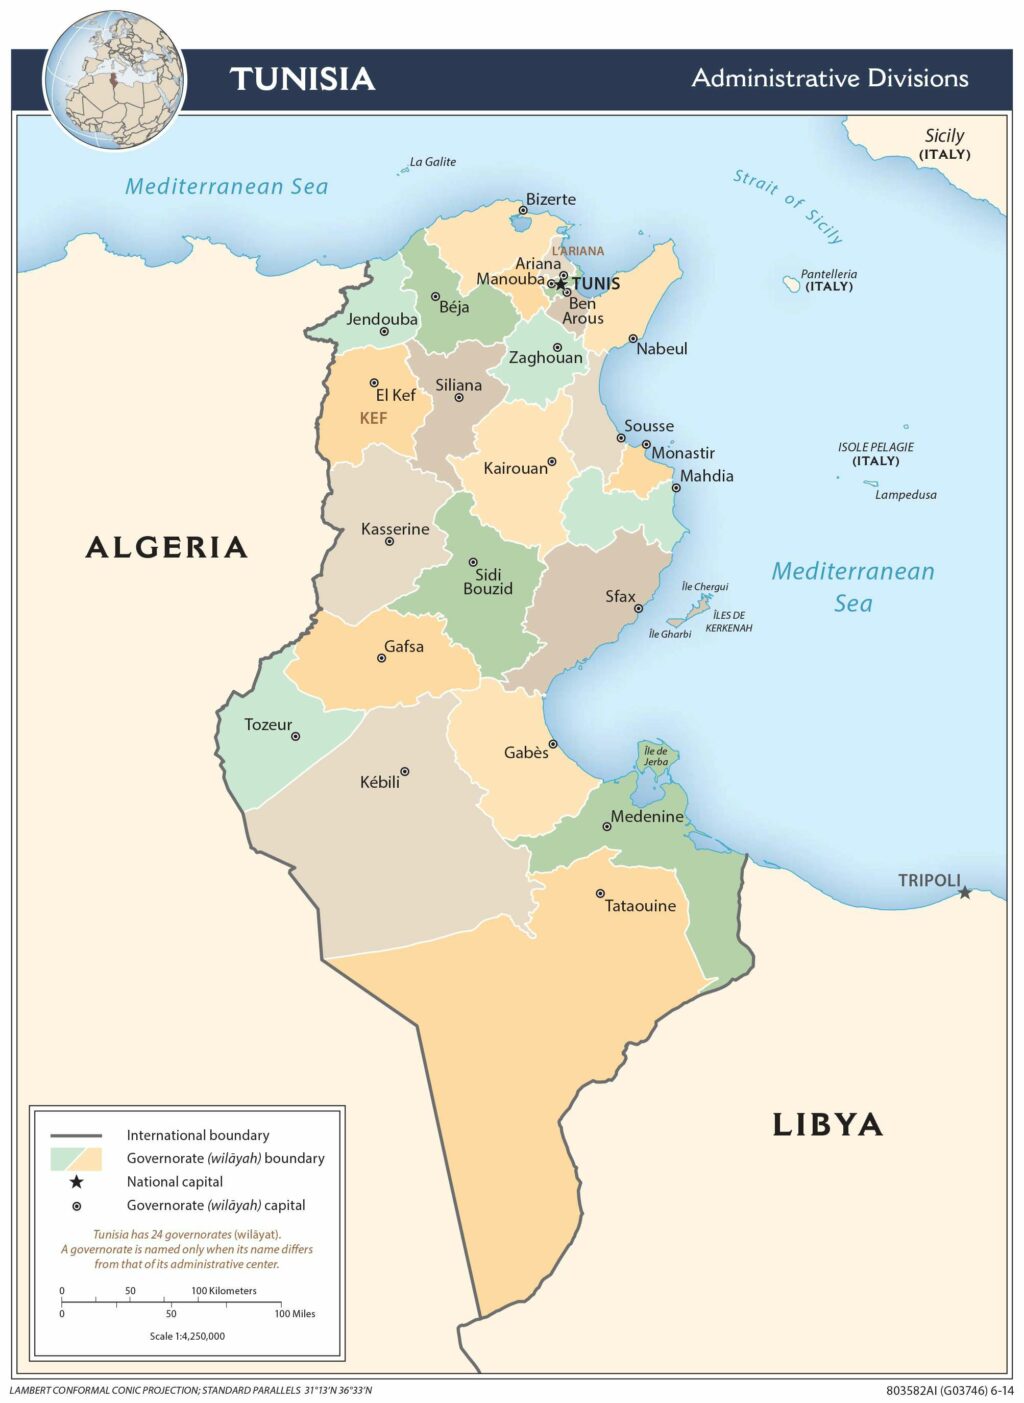 Tunisia administrative map.